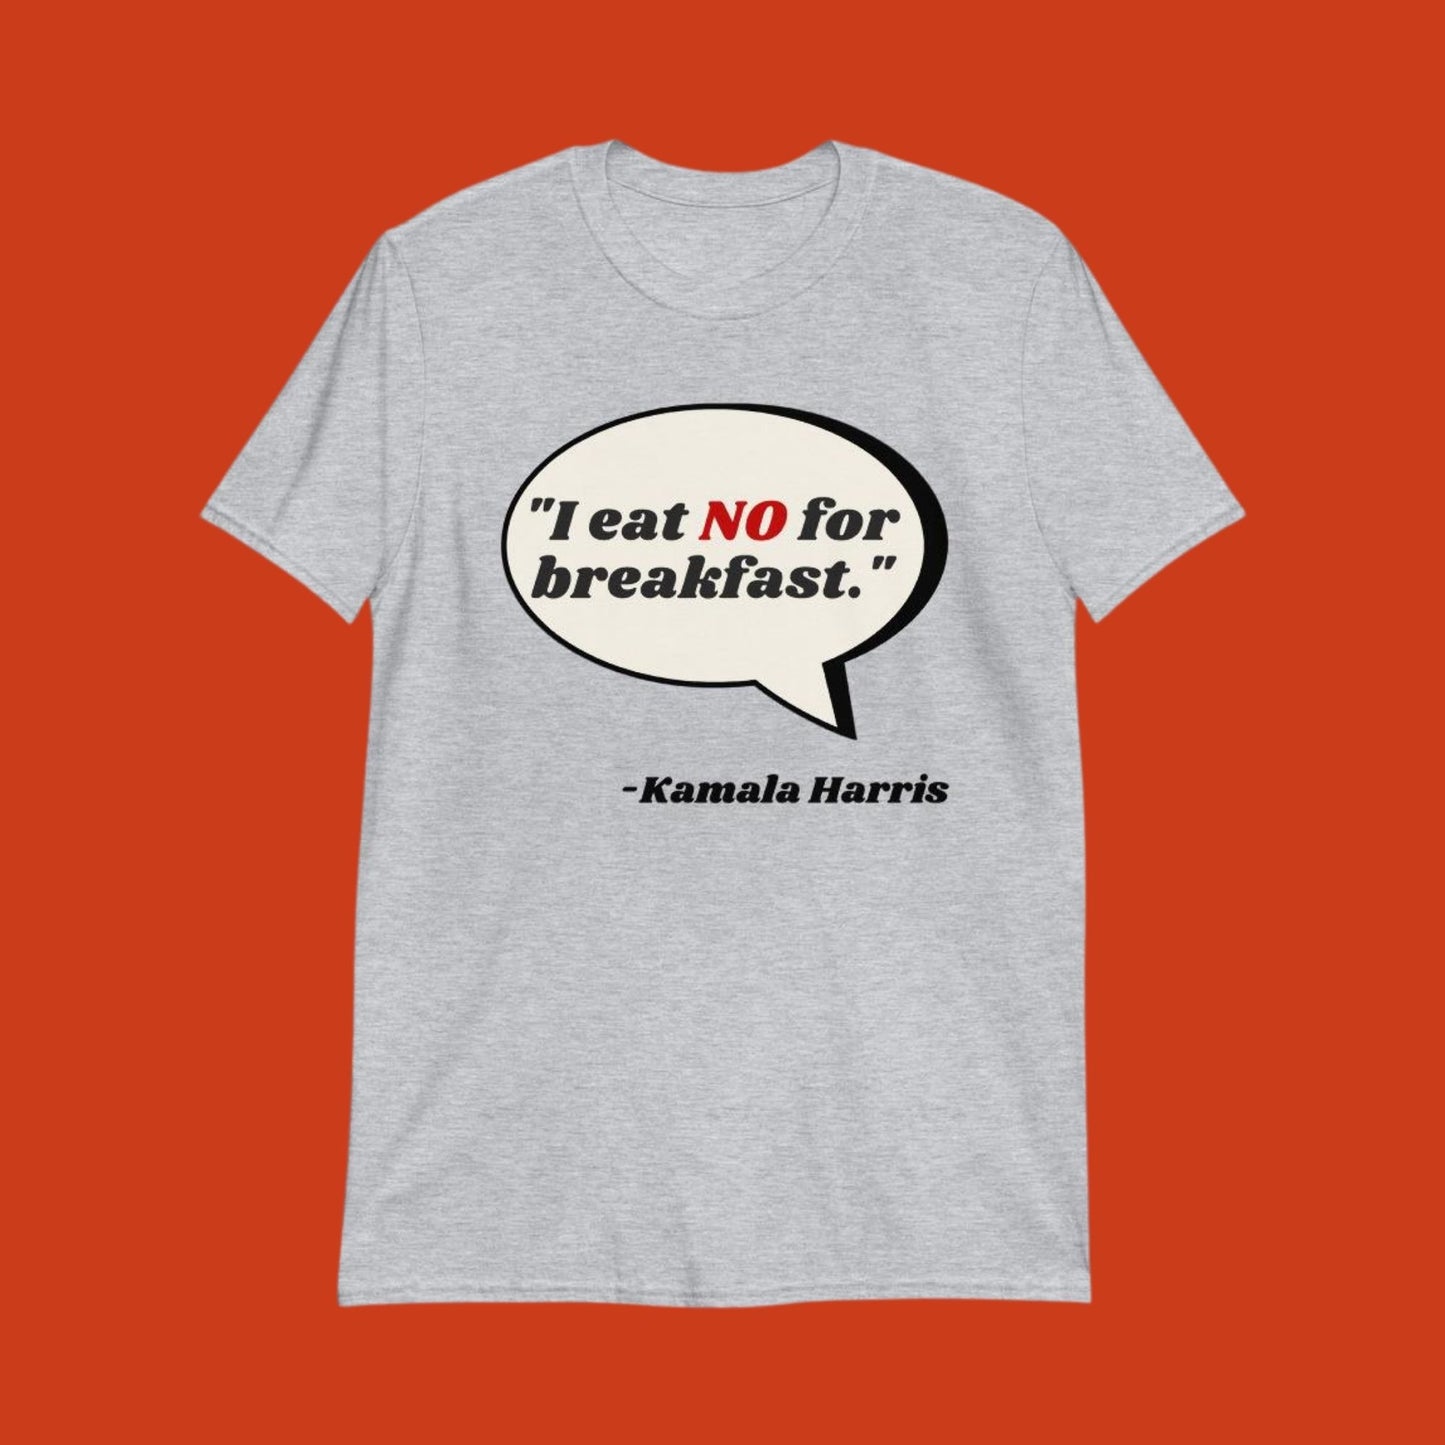 Kamala Harris - "No" for Breakfast Quote T-shirt